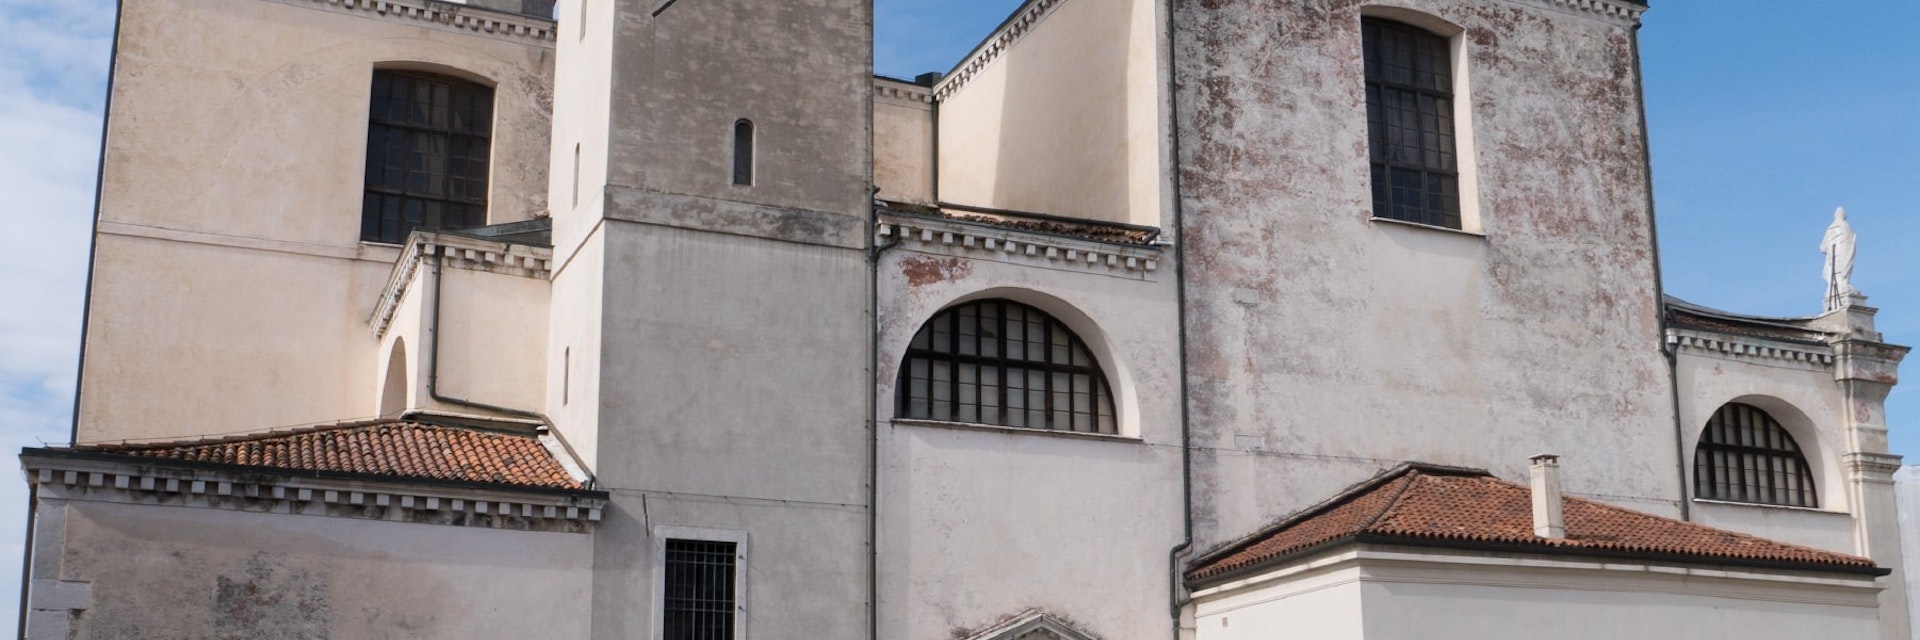 Chiesa dell'Arcangelo Raffaele, the church stands in a quiet square.